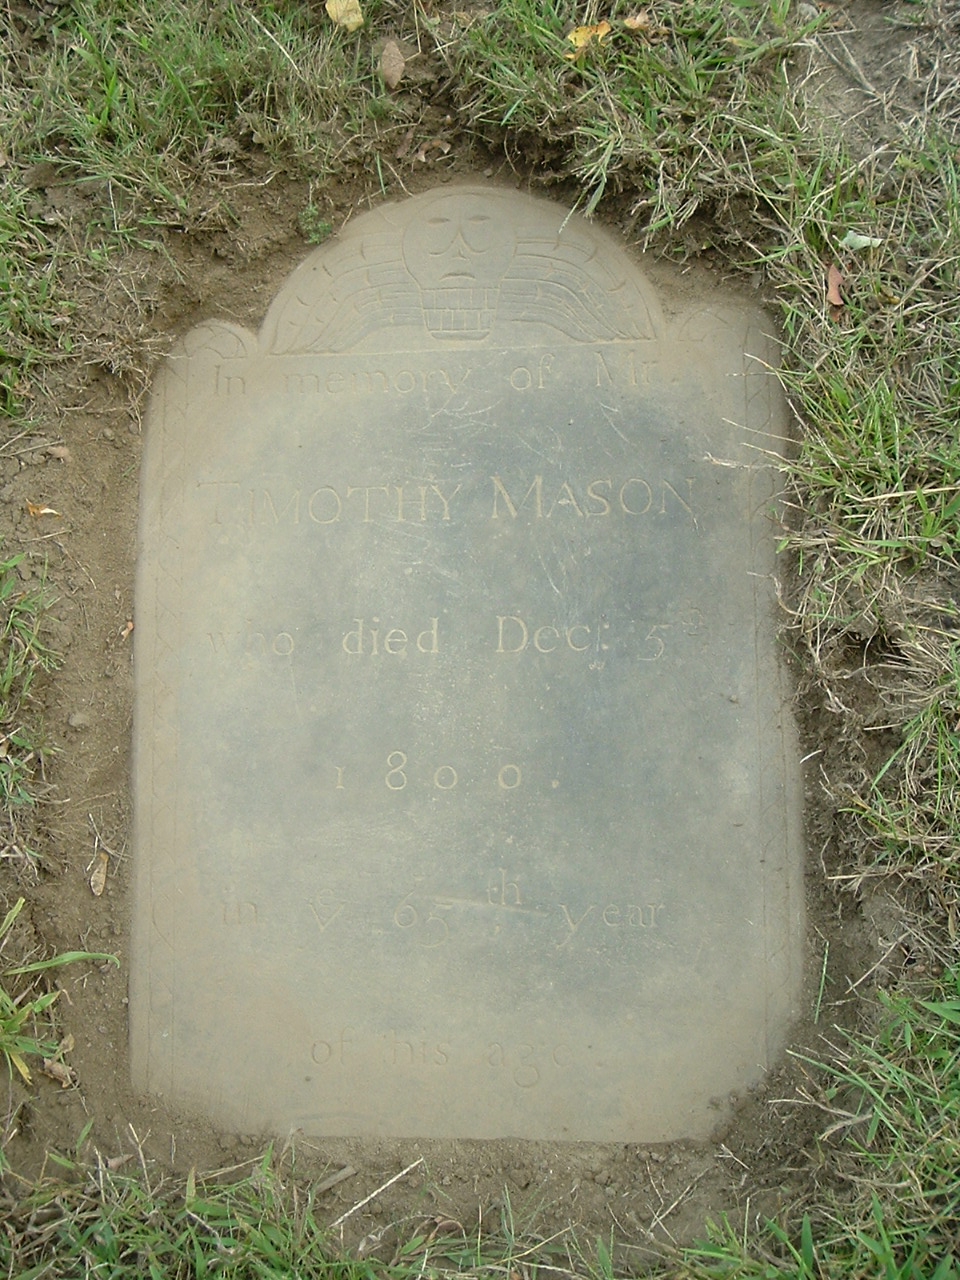 Timothy Mason gravesite